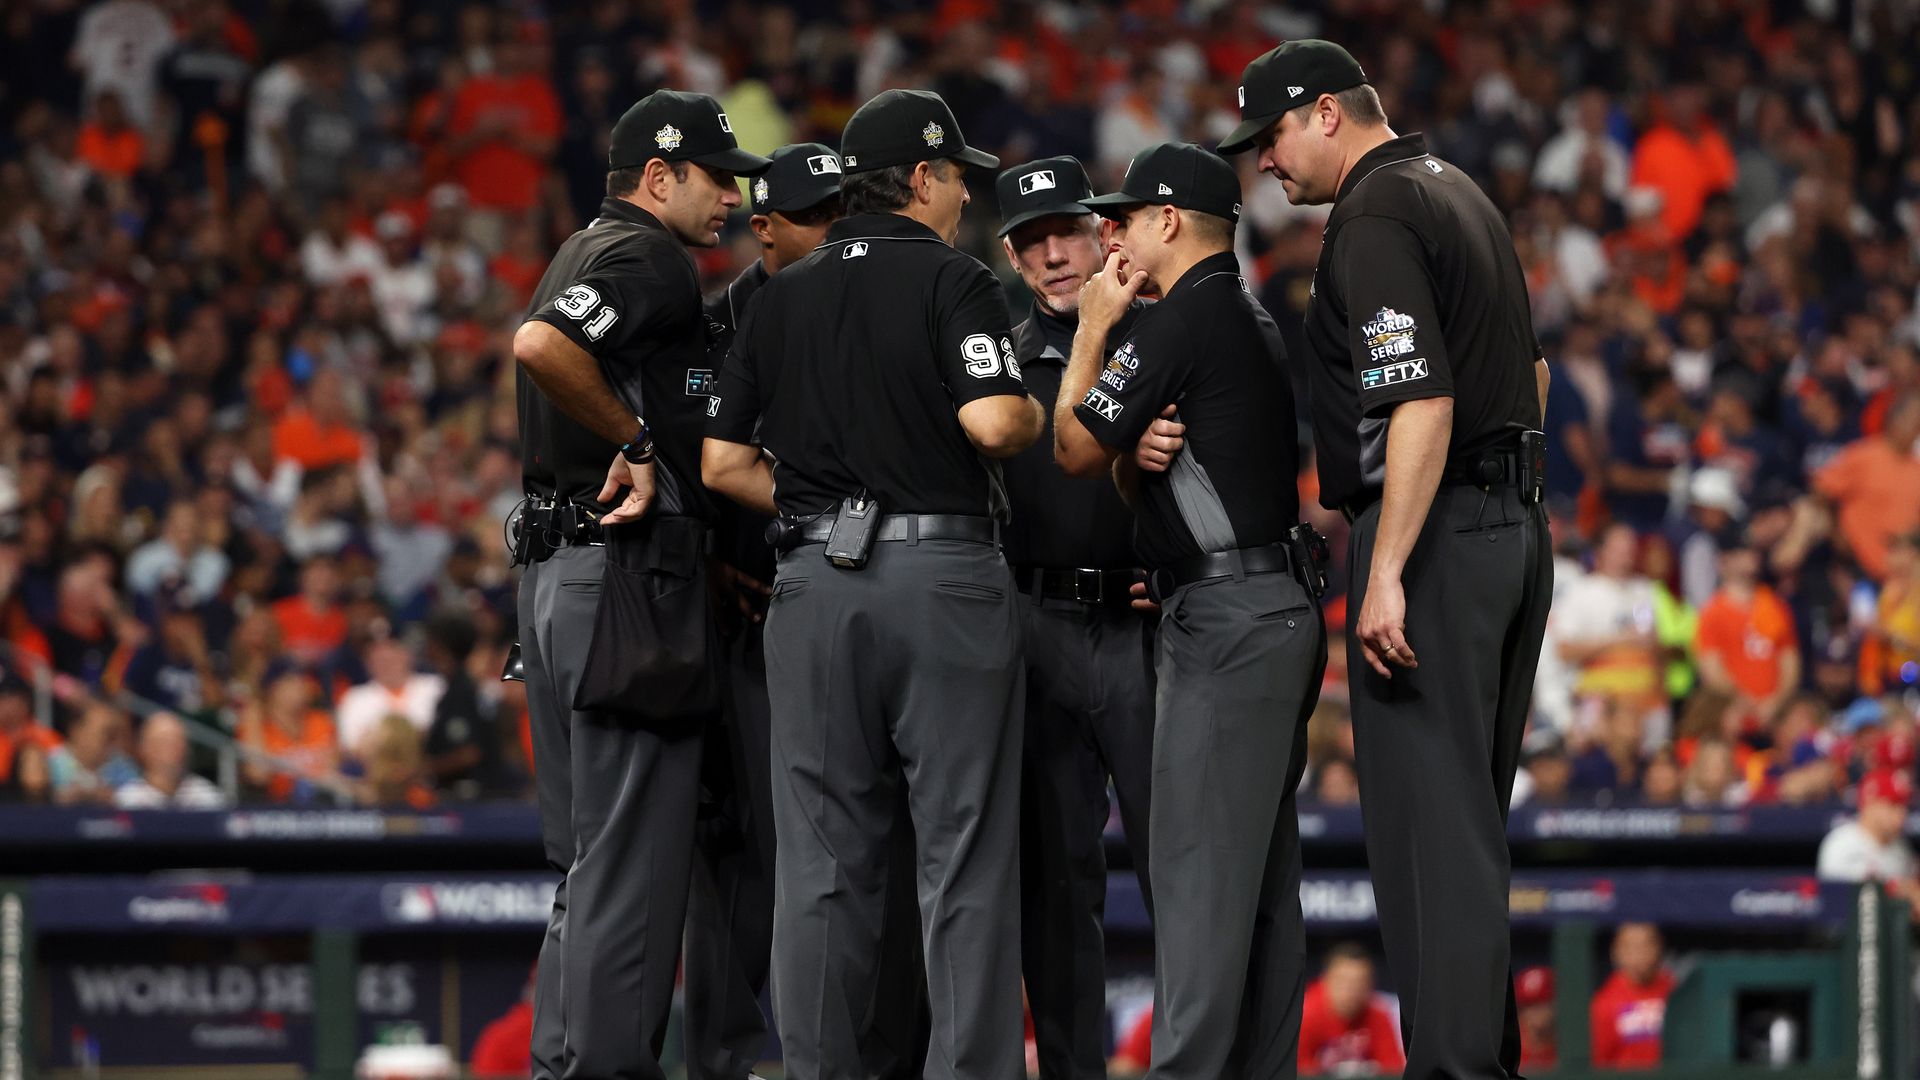 10 Major League Baseball umpires retire in historic exodus